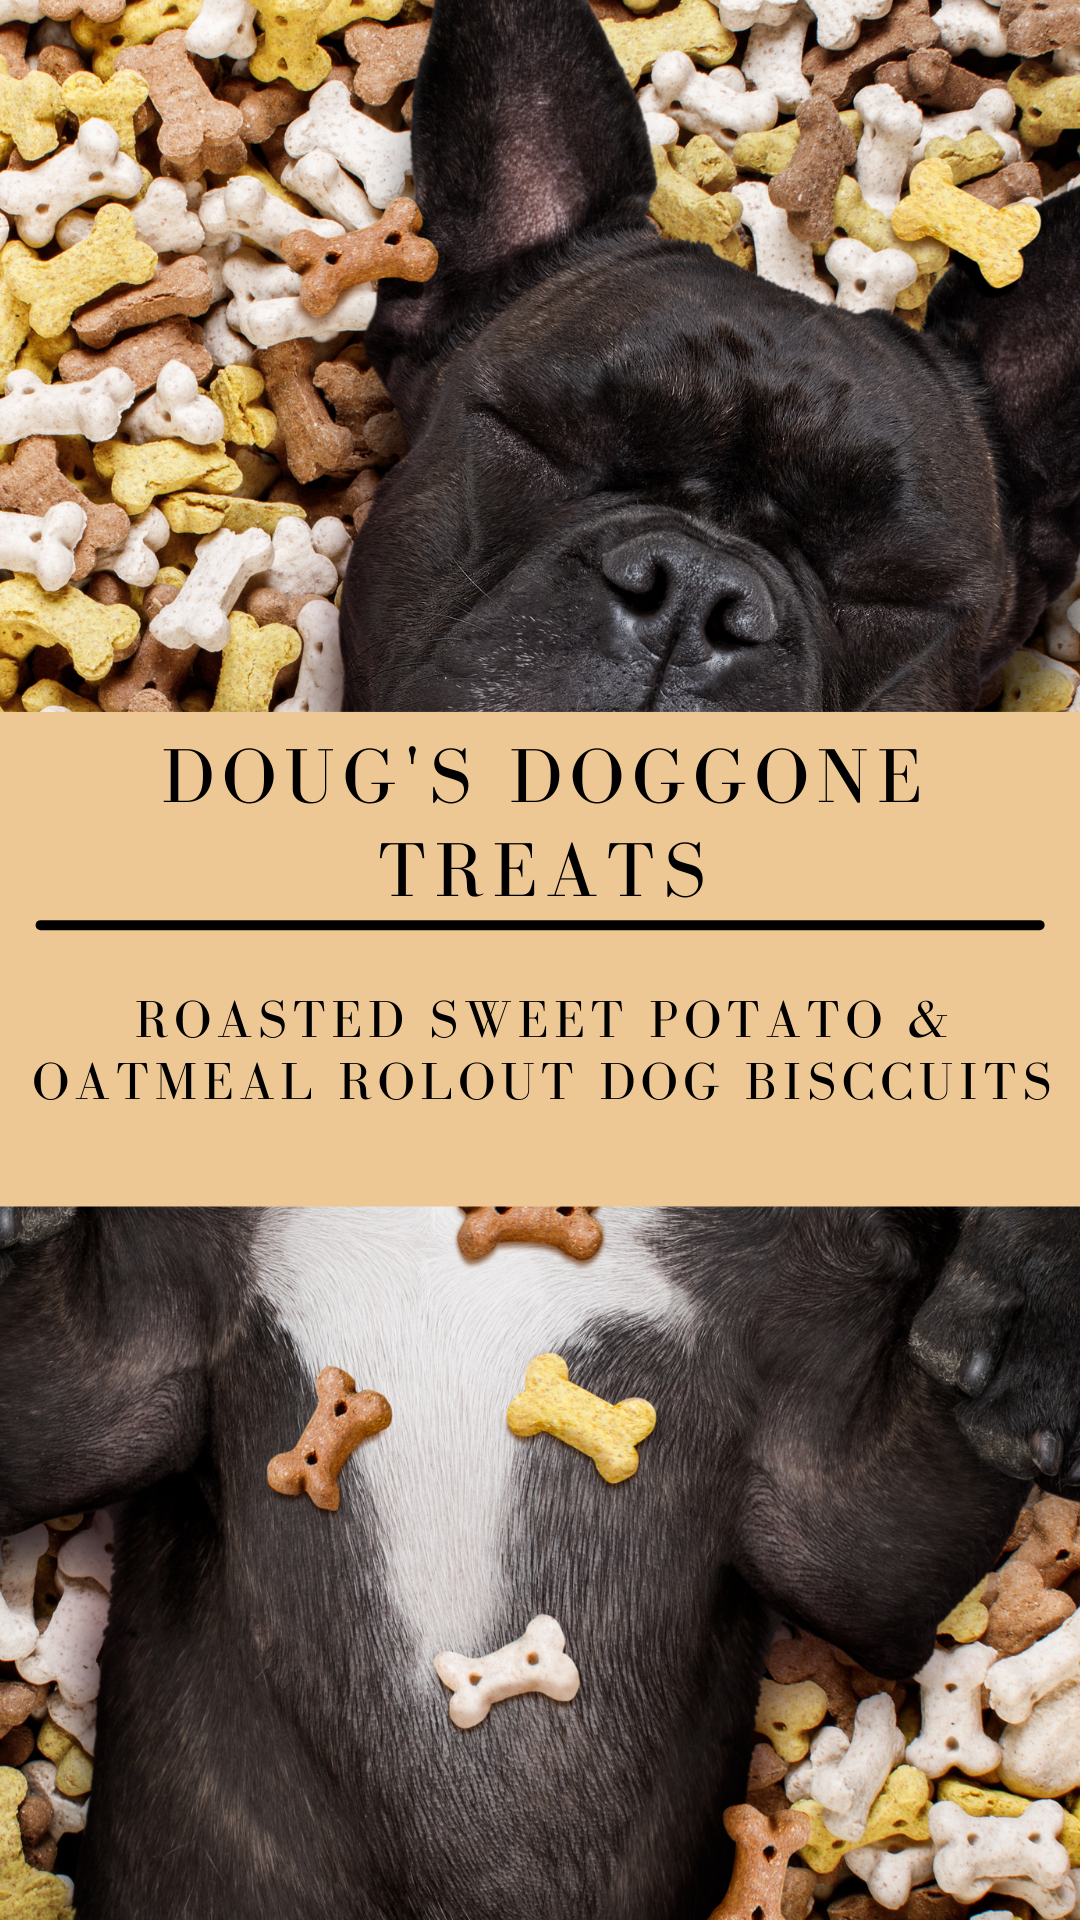 Doug's Doggone Treats: Roasted Sweet Potato & Oatmeal Rollout Dog Biscuits